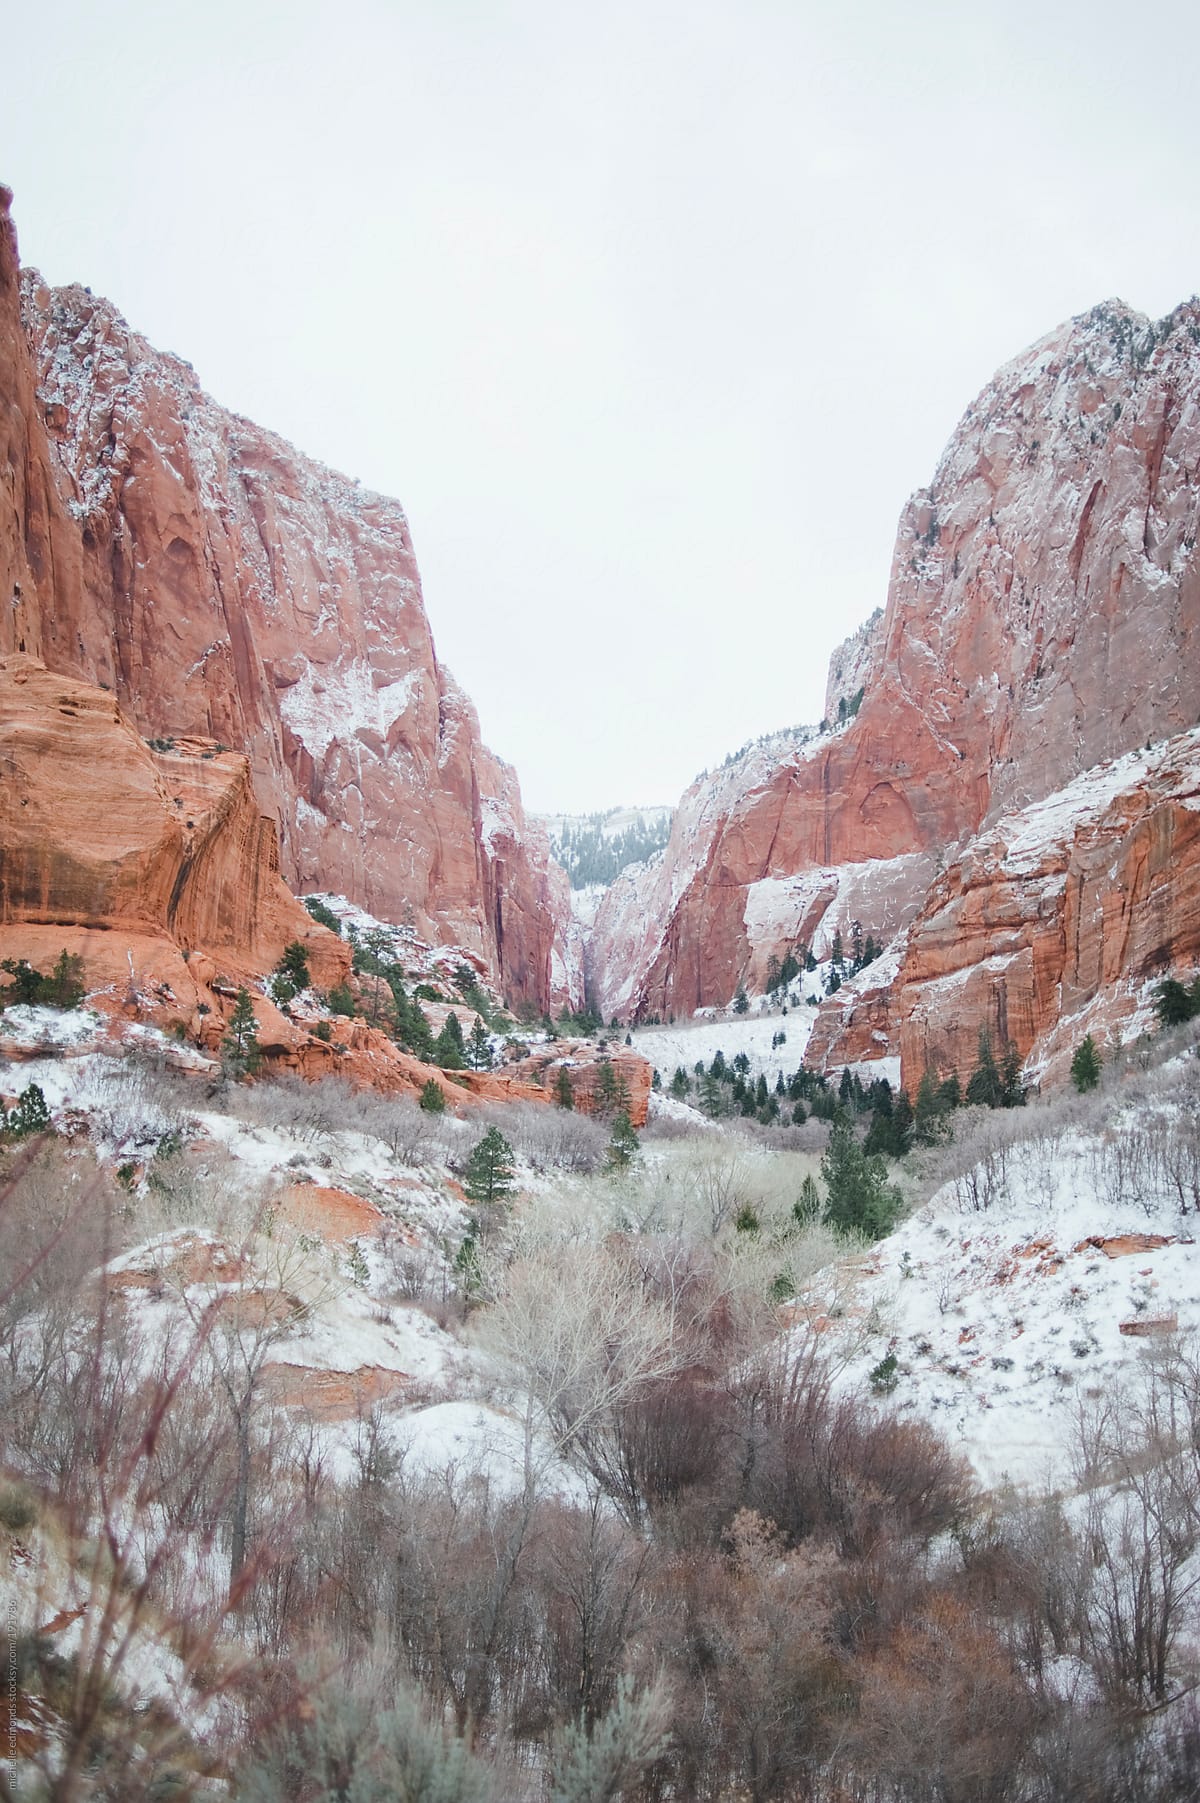 Wintery and snowy desert landscape in Utah